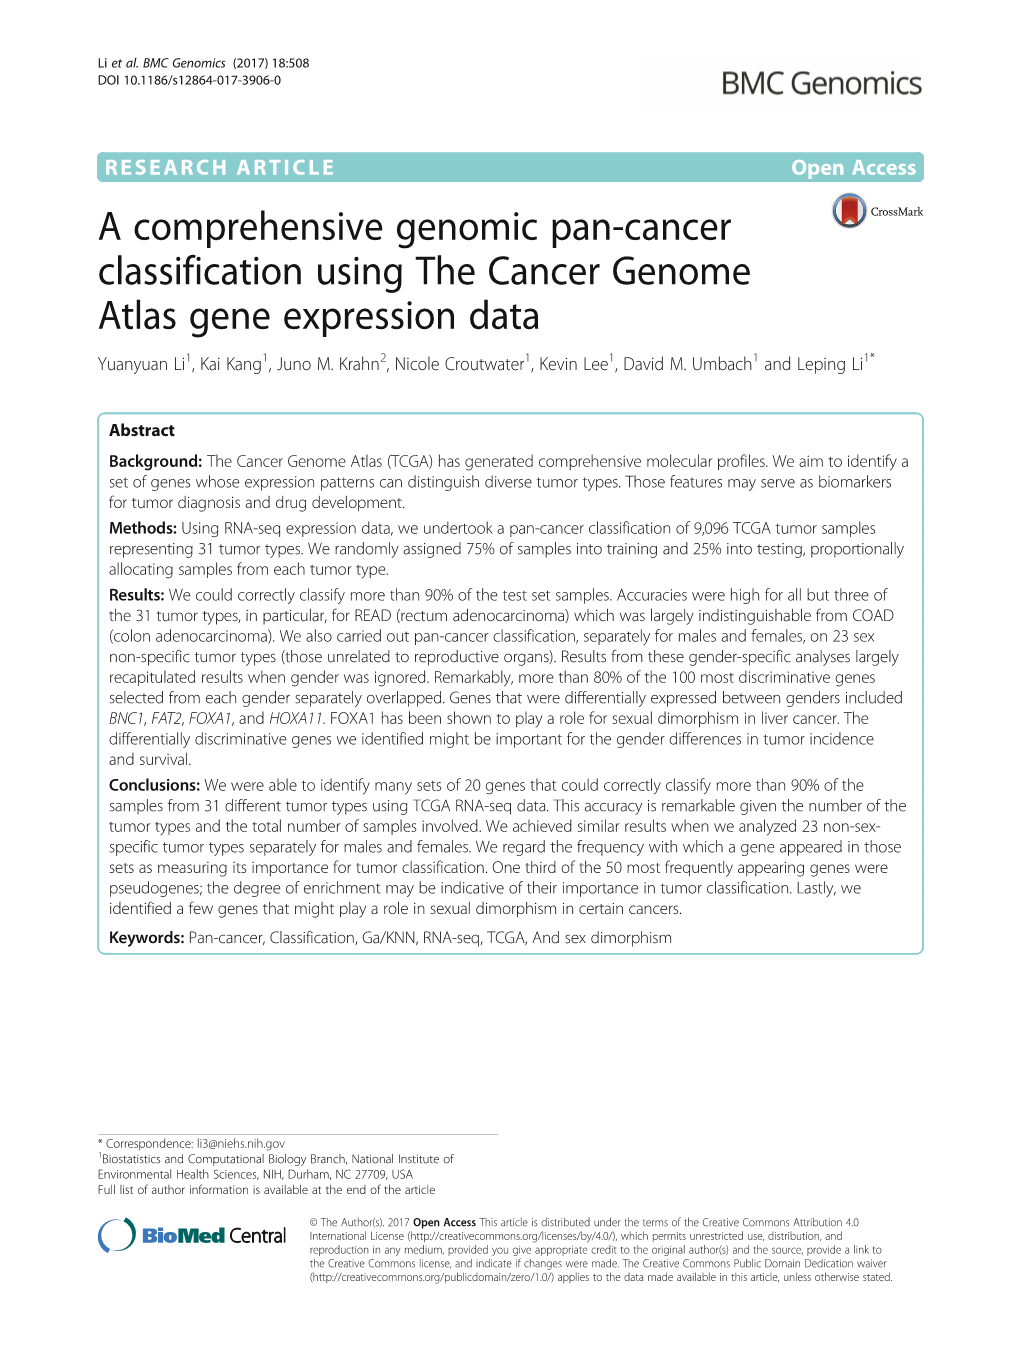 A Comprehensive Genomic Pan-Cancer Classification Using the Cancer Genome Atlas Gene Expression Data Yuanyuan Li1, Kai Kang1, Juno M